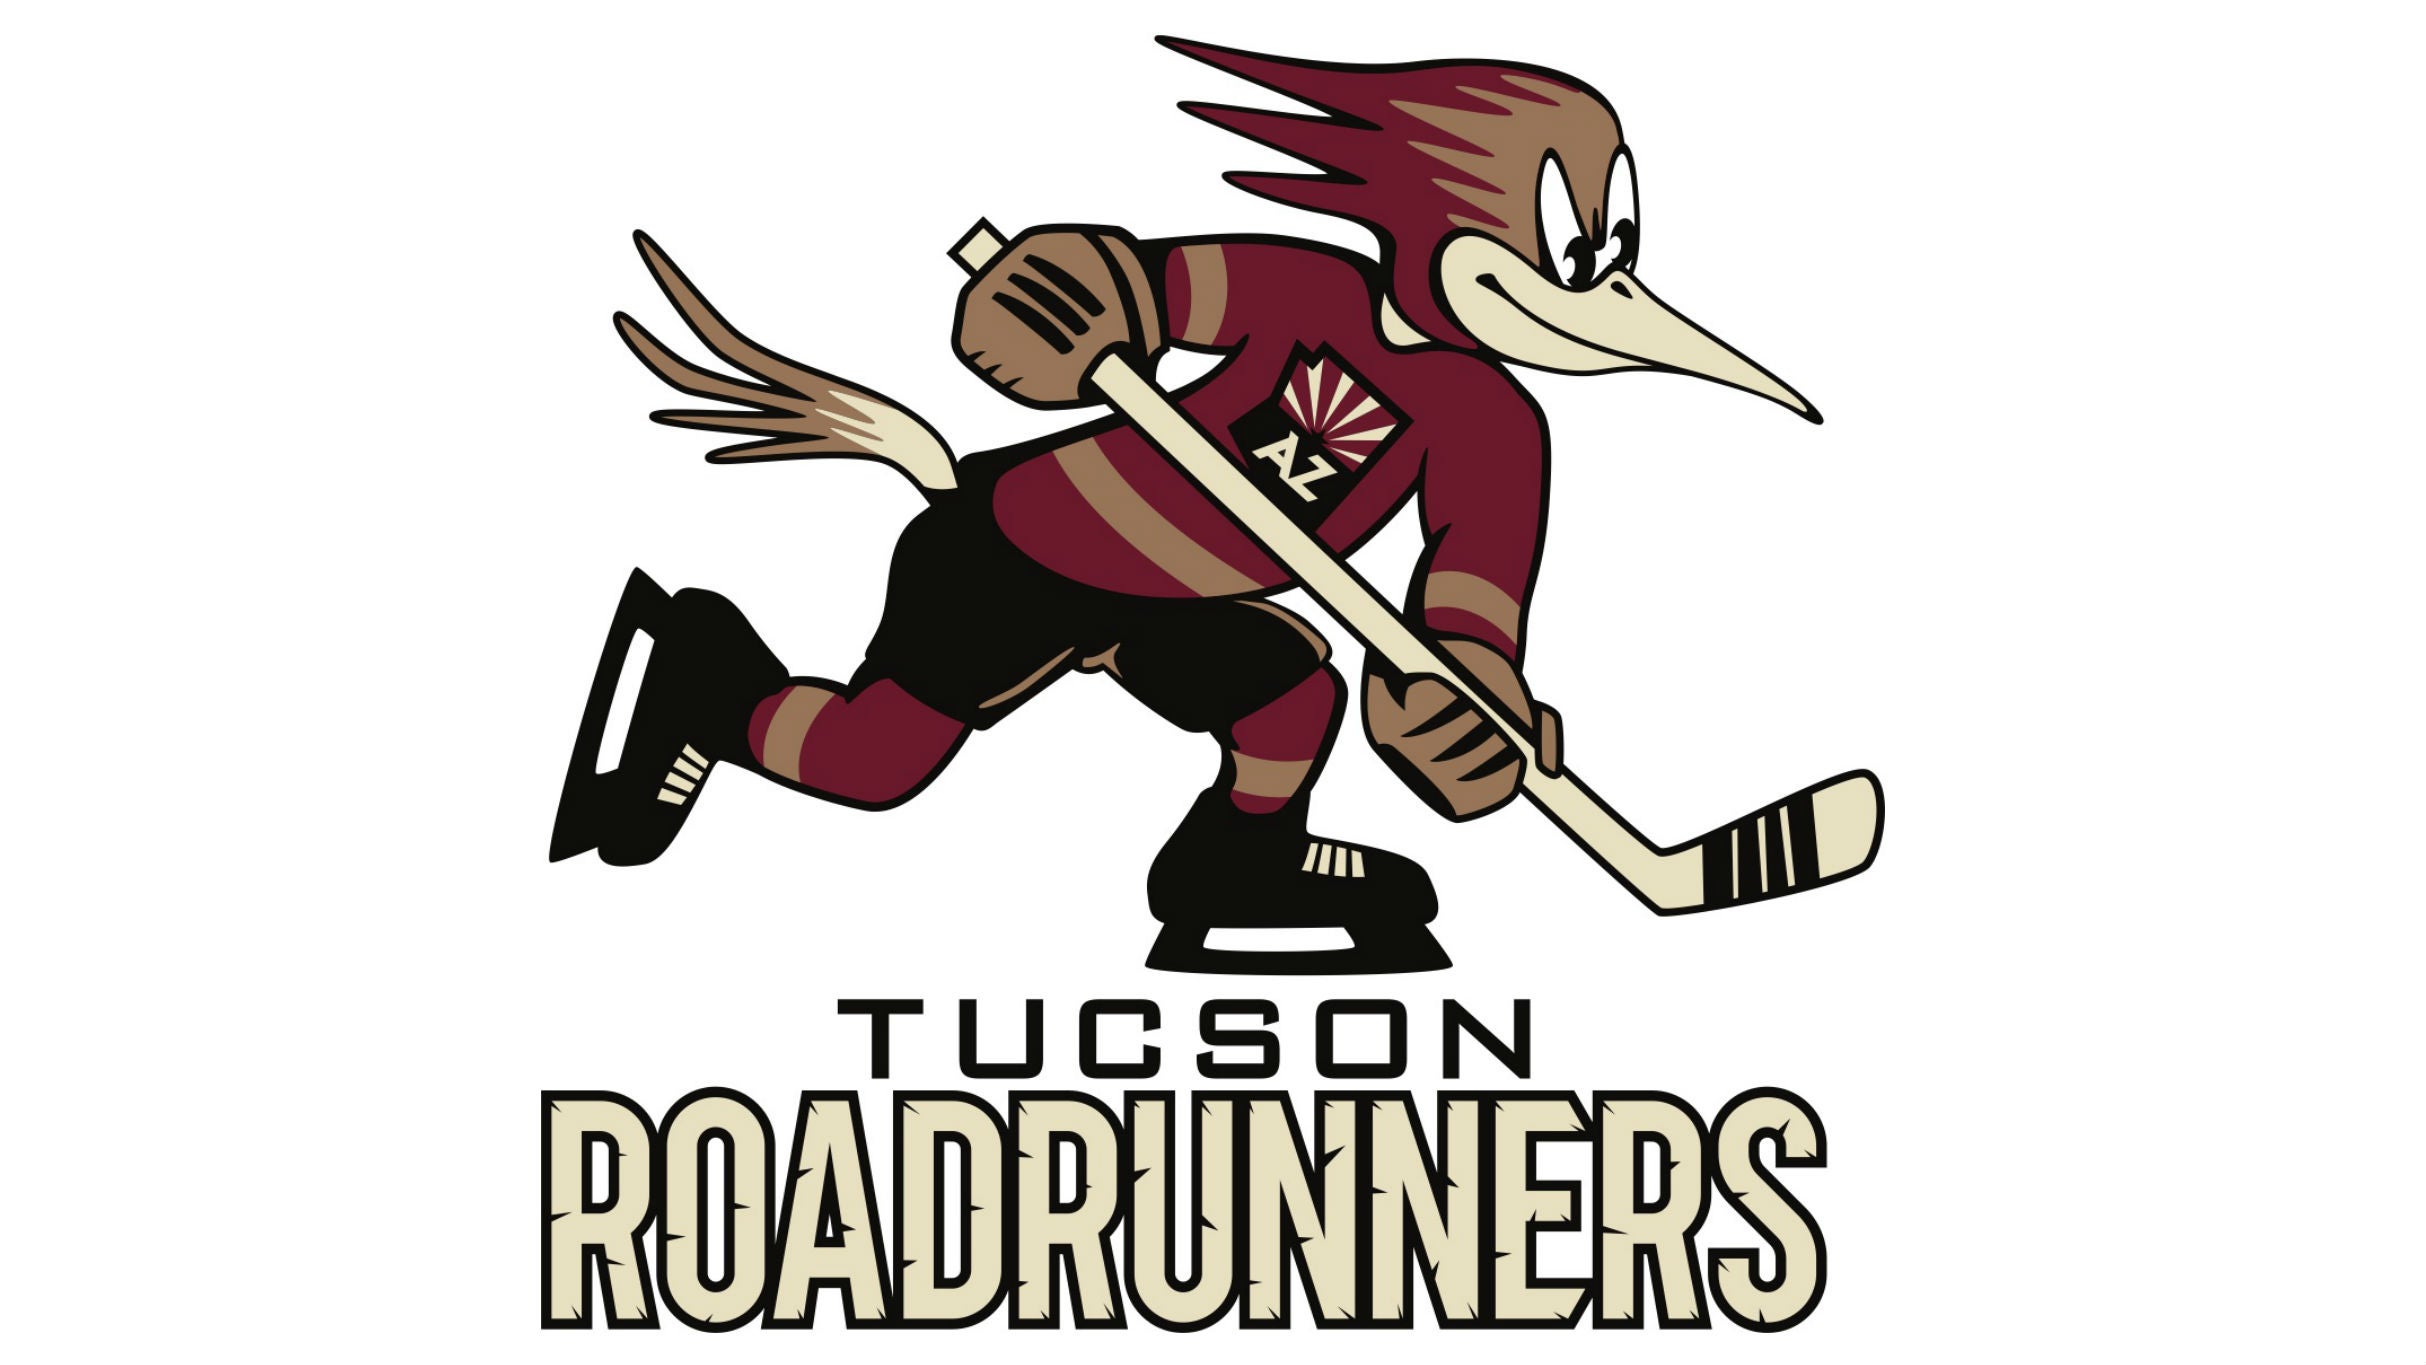 Tucson Roadrunners Game 1 at Tucson Arena